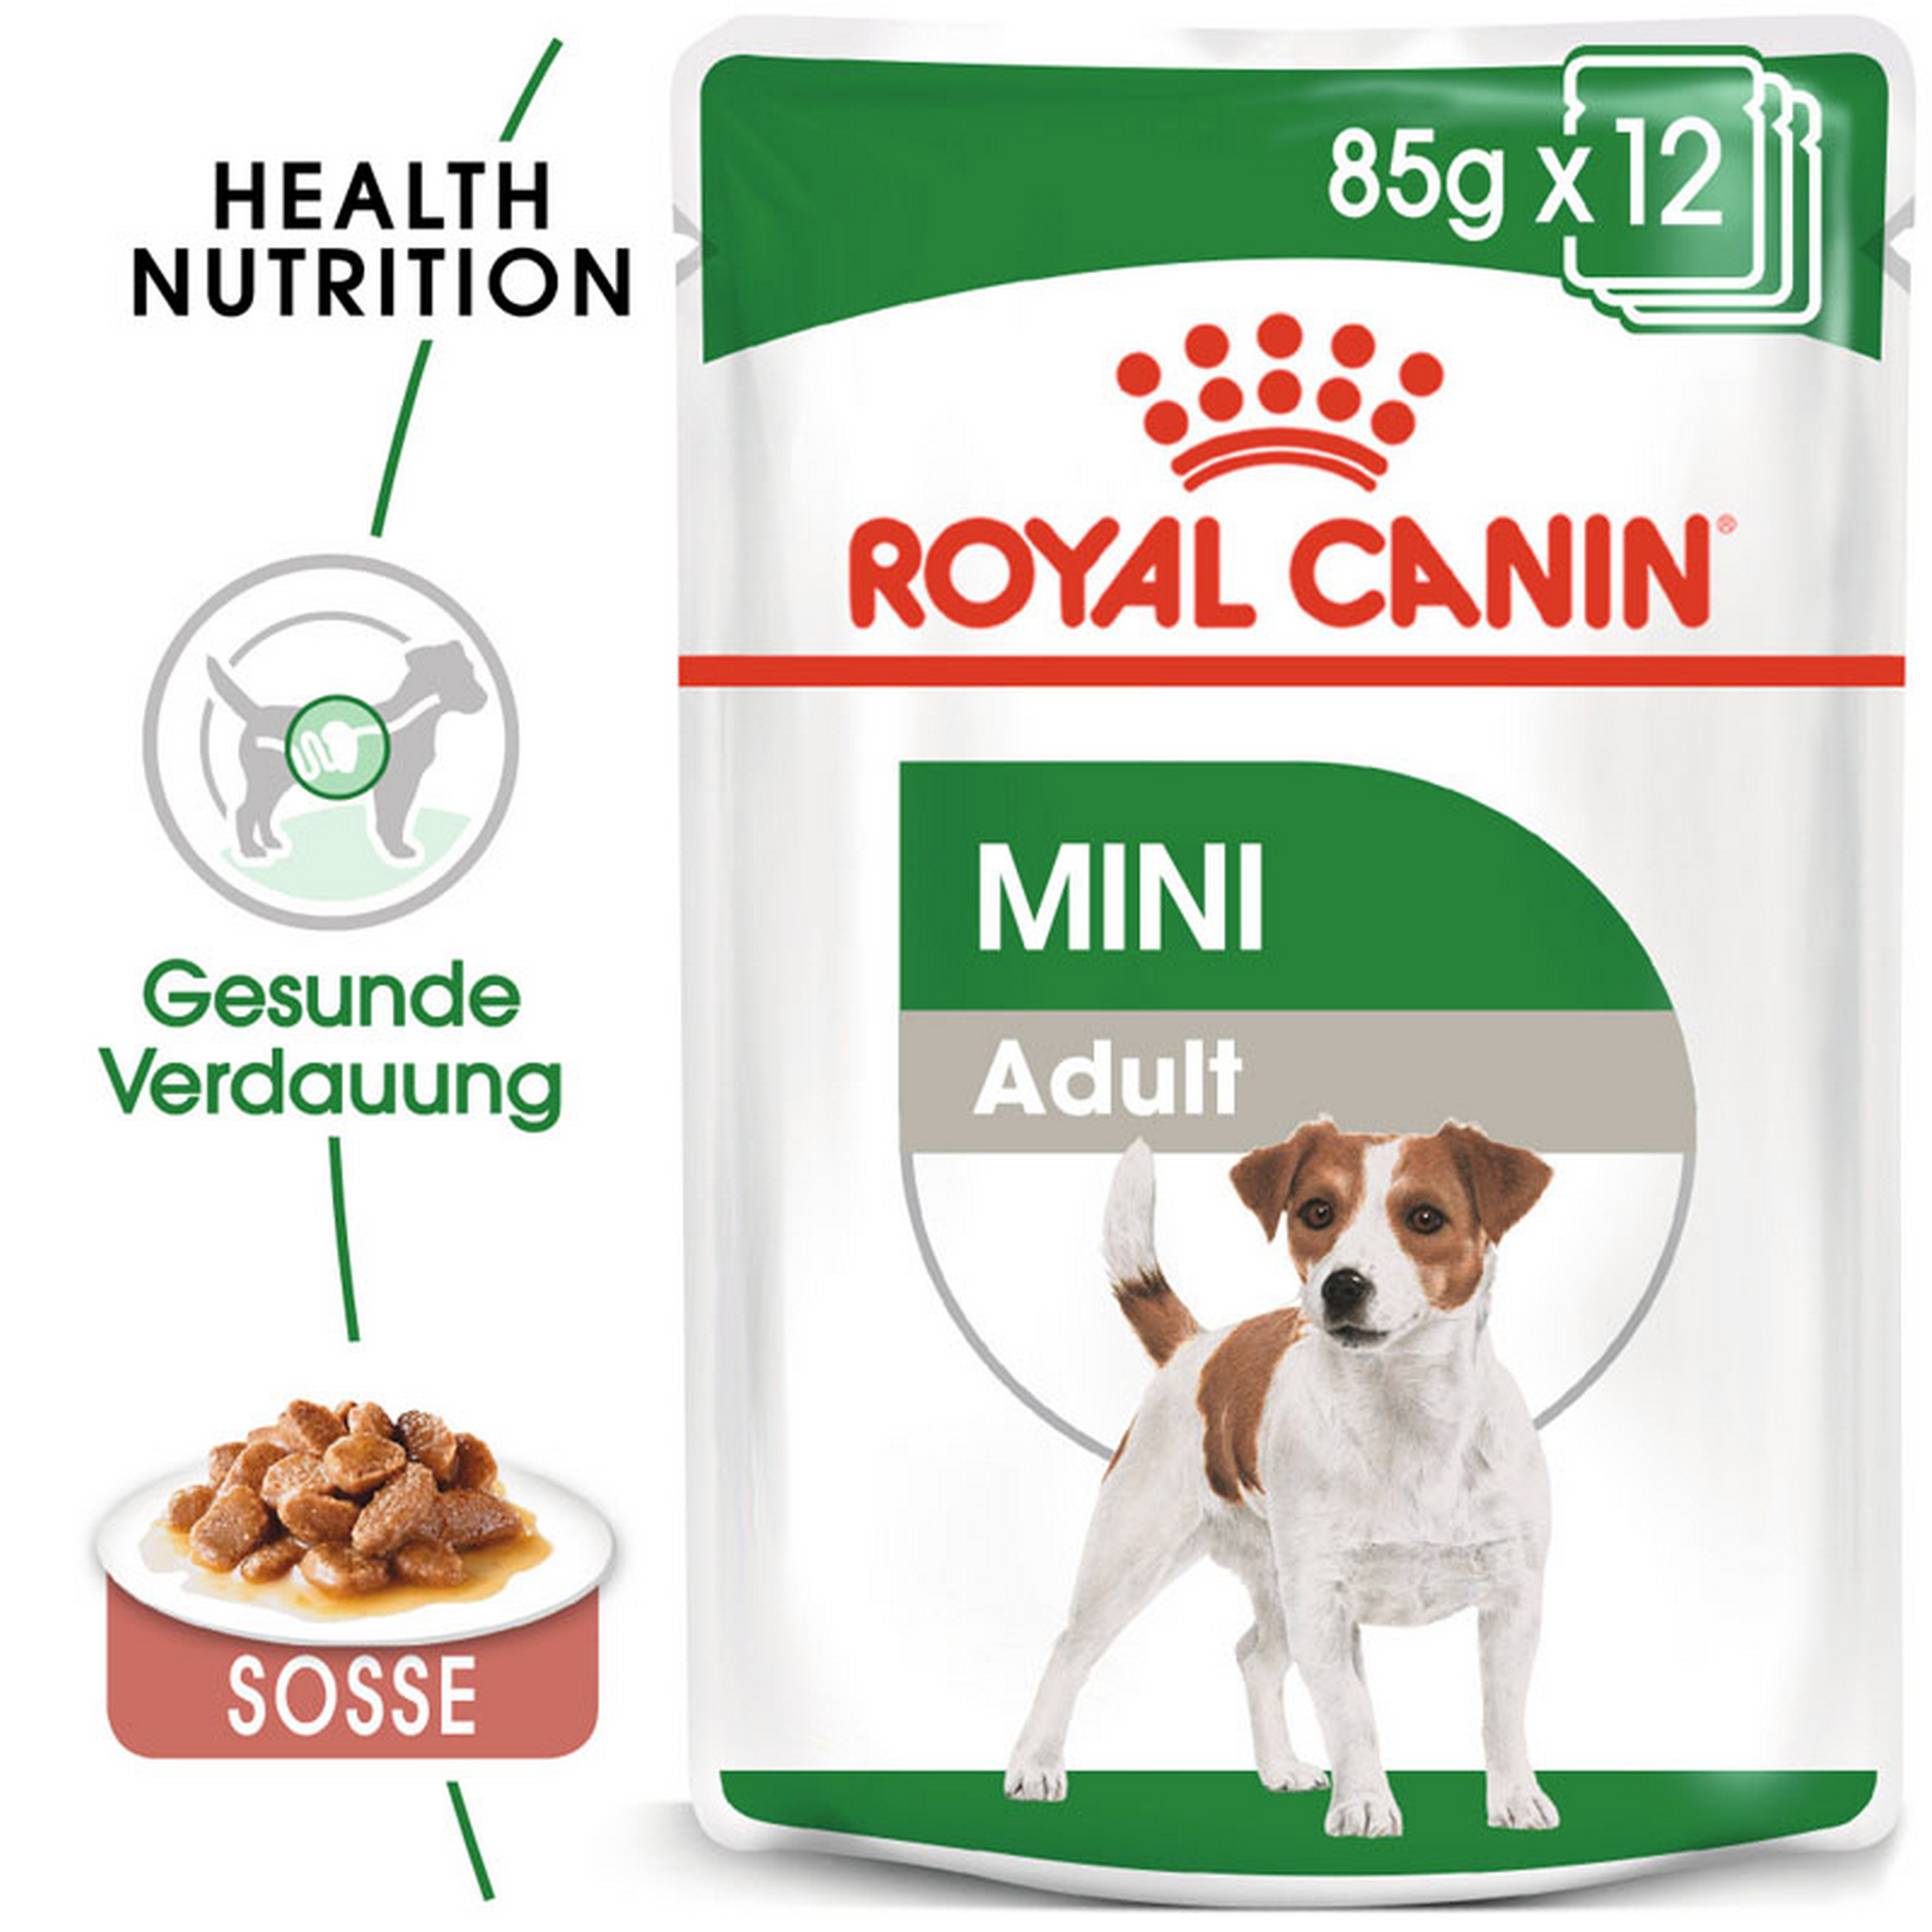 Royal Canin ROYAL CANIN MINI ADULT Nassfutter für ausgewachsene kleine